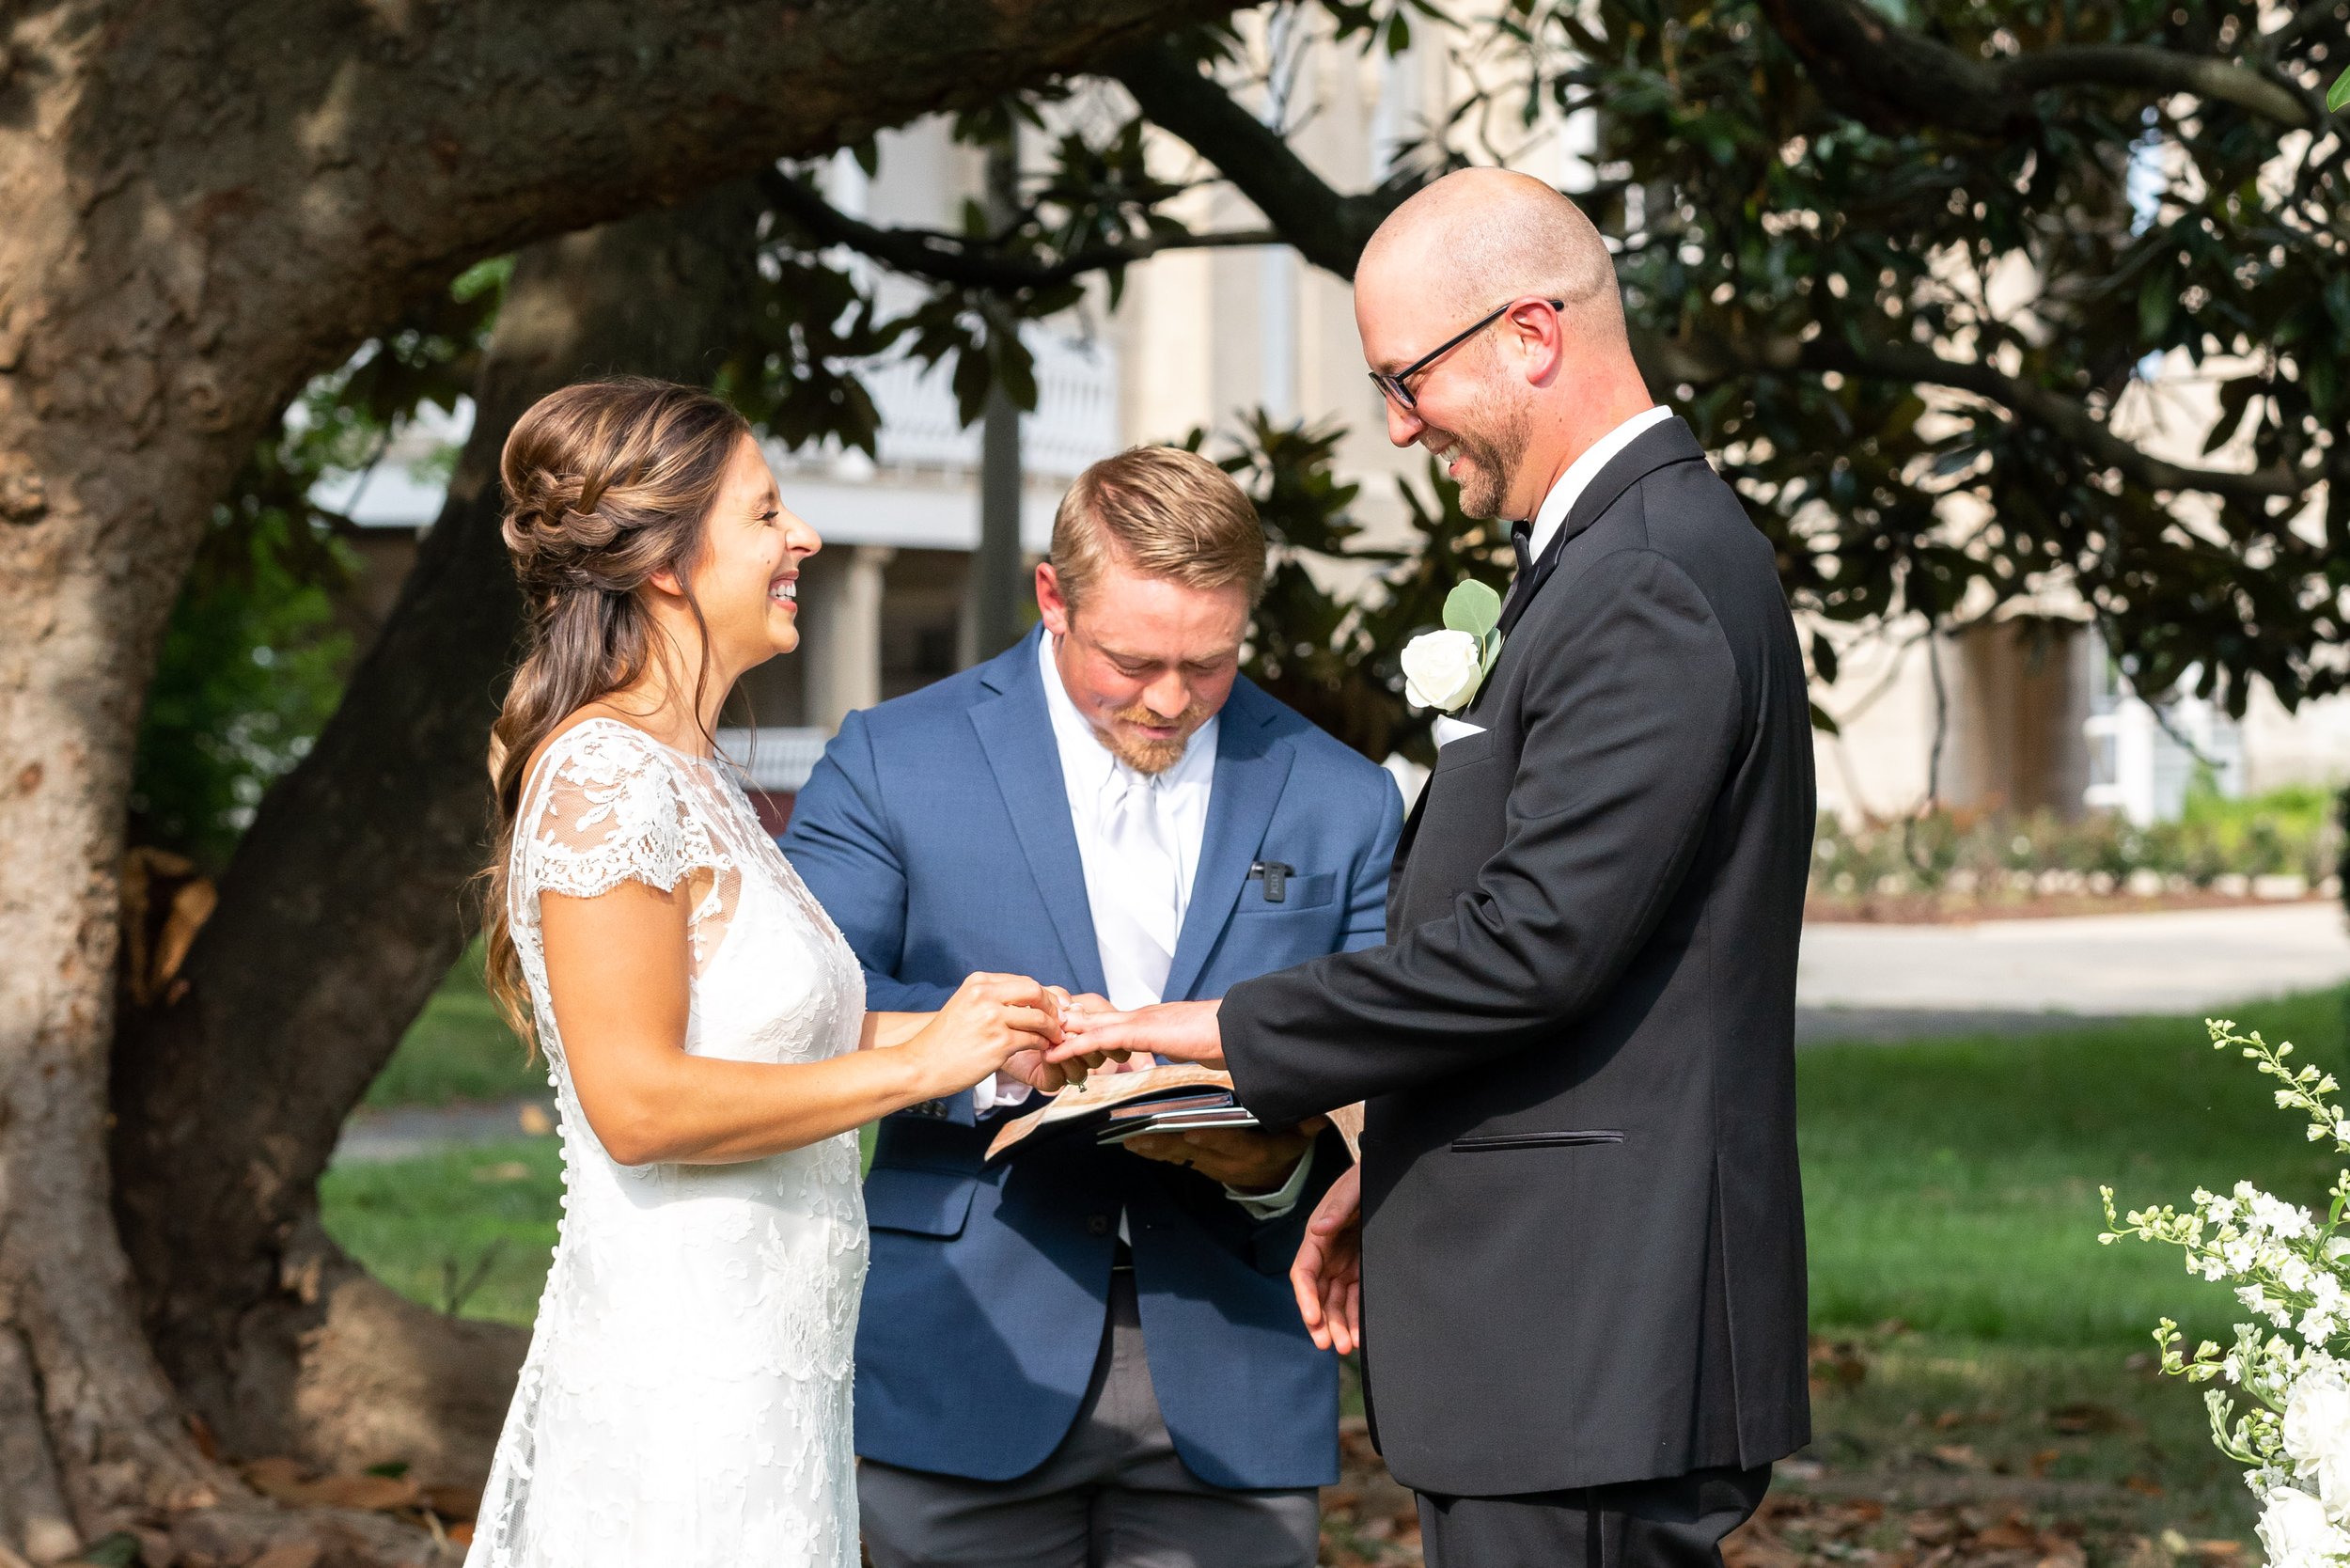 Wedding ceremony photos under magnolia tree in the summer